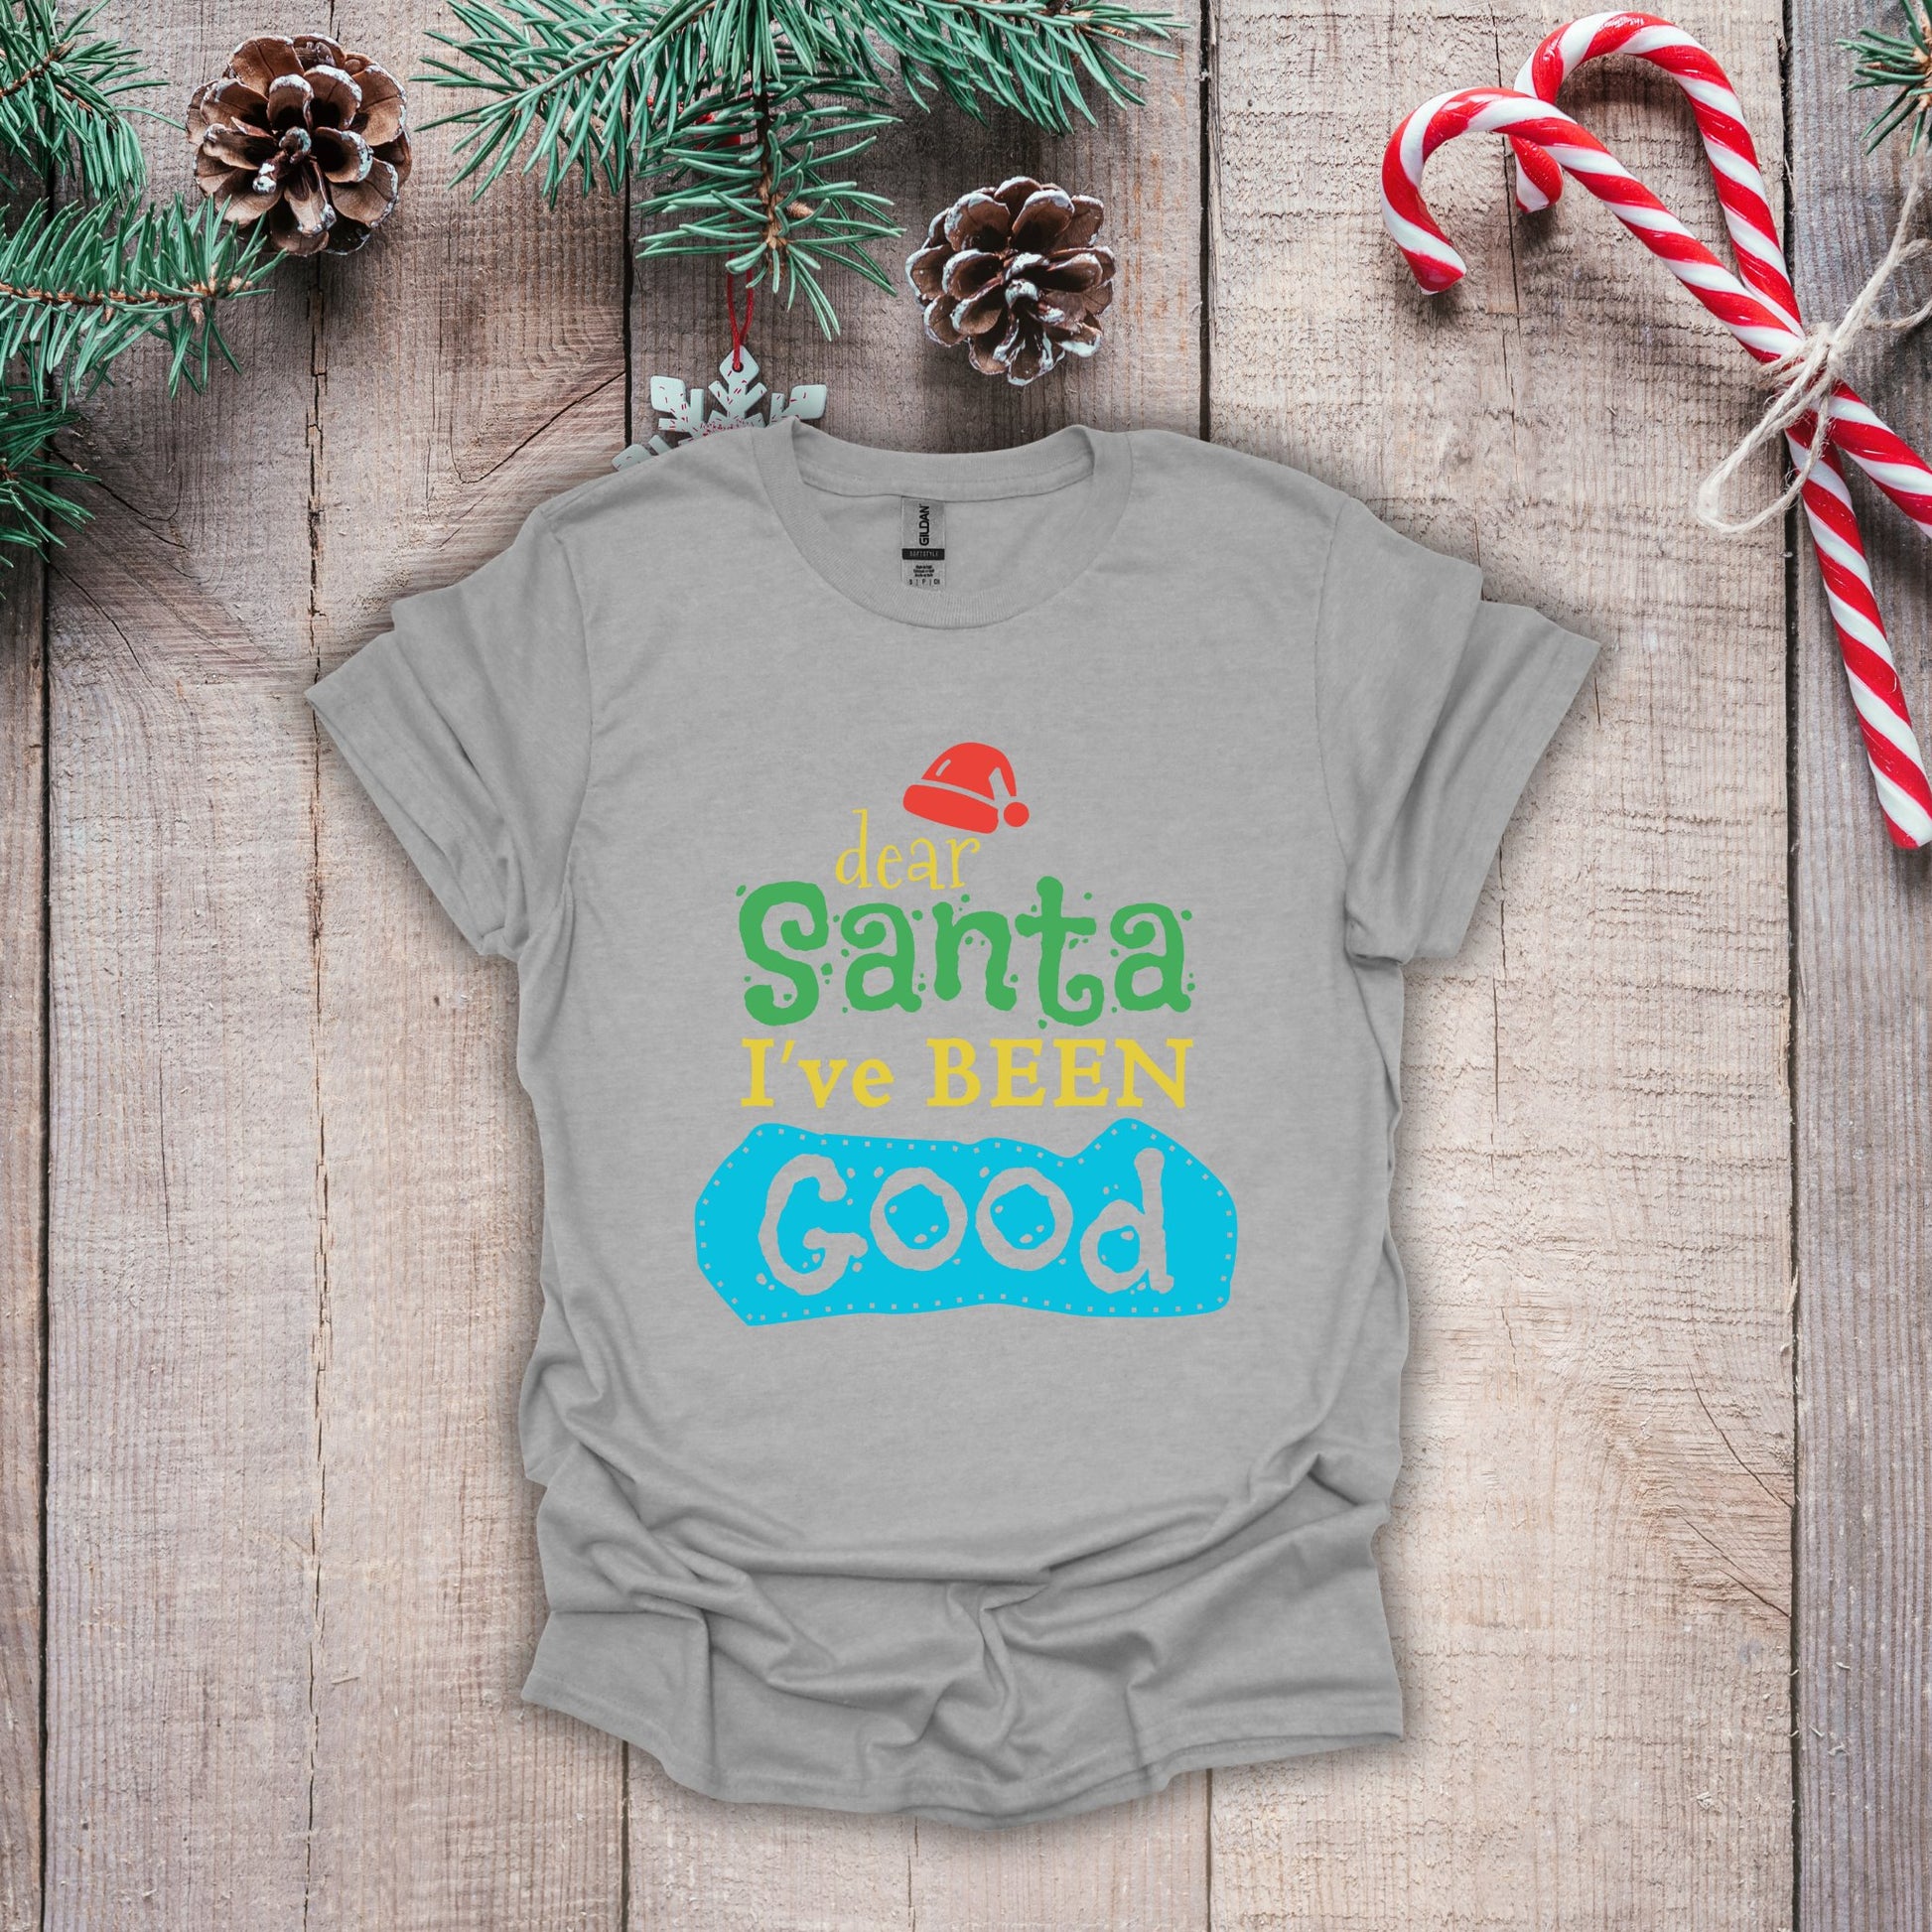 Christmas T-Shirt - Dear Santa I've Been Good - Cute Christmas Shirts - Youth and Adult Christmas TShirts T-Shirts Graphic Avenue Light Gray Adult Small 